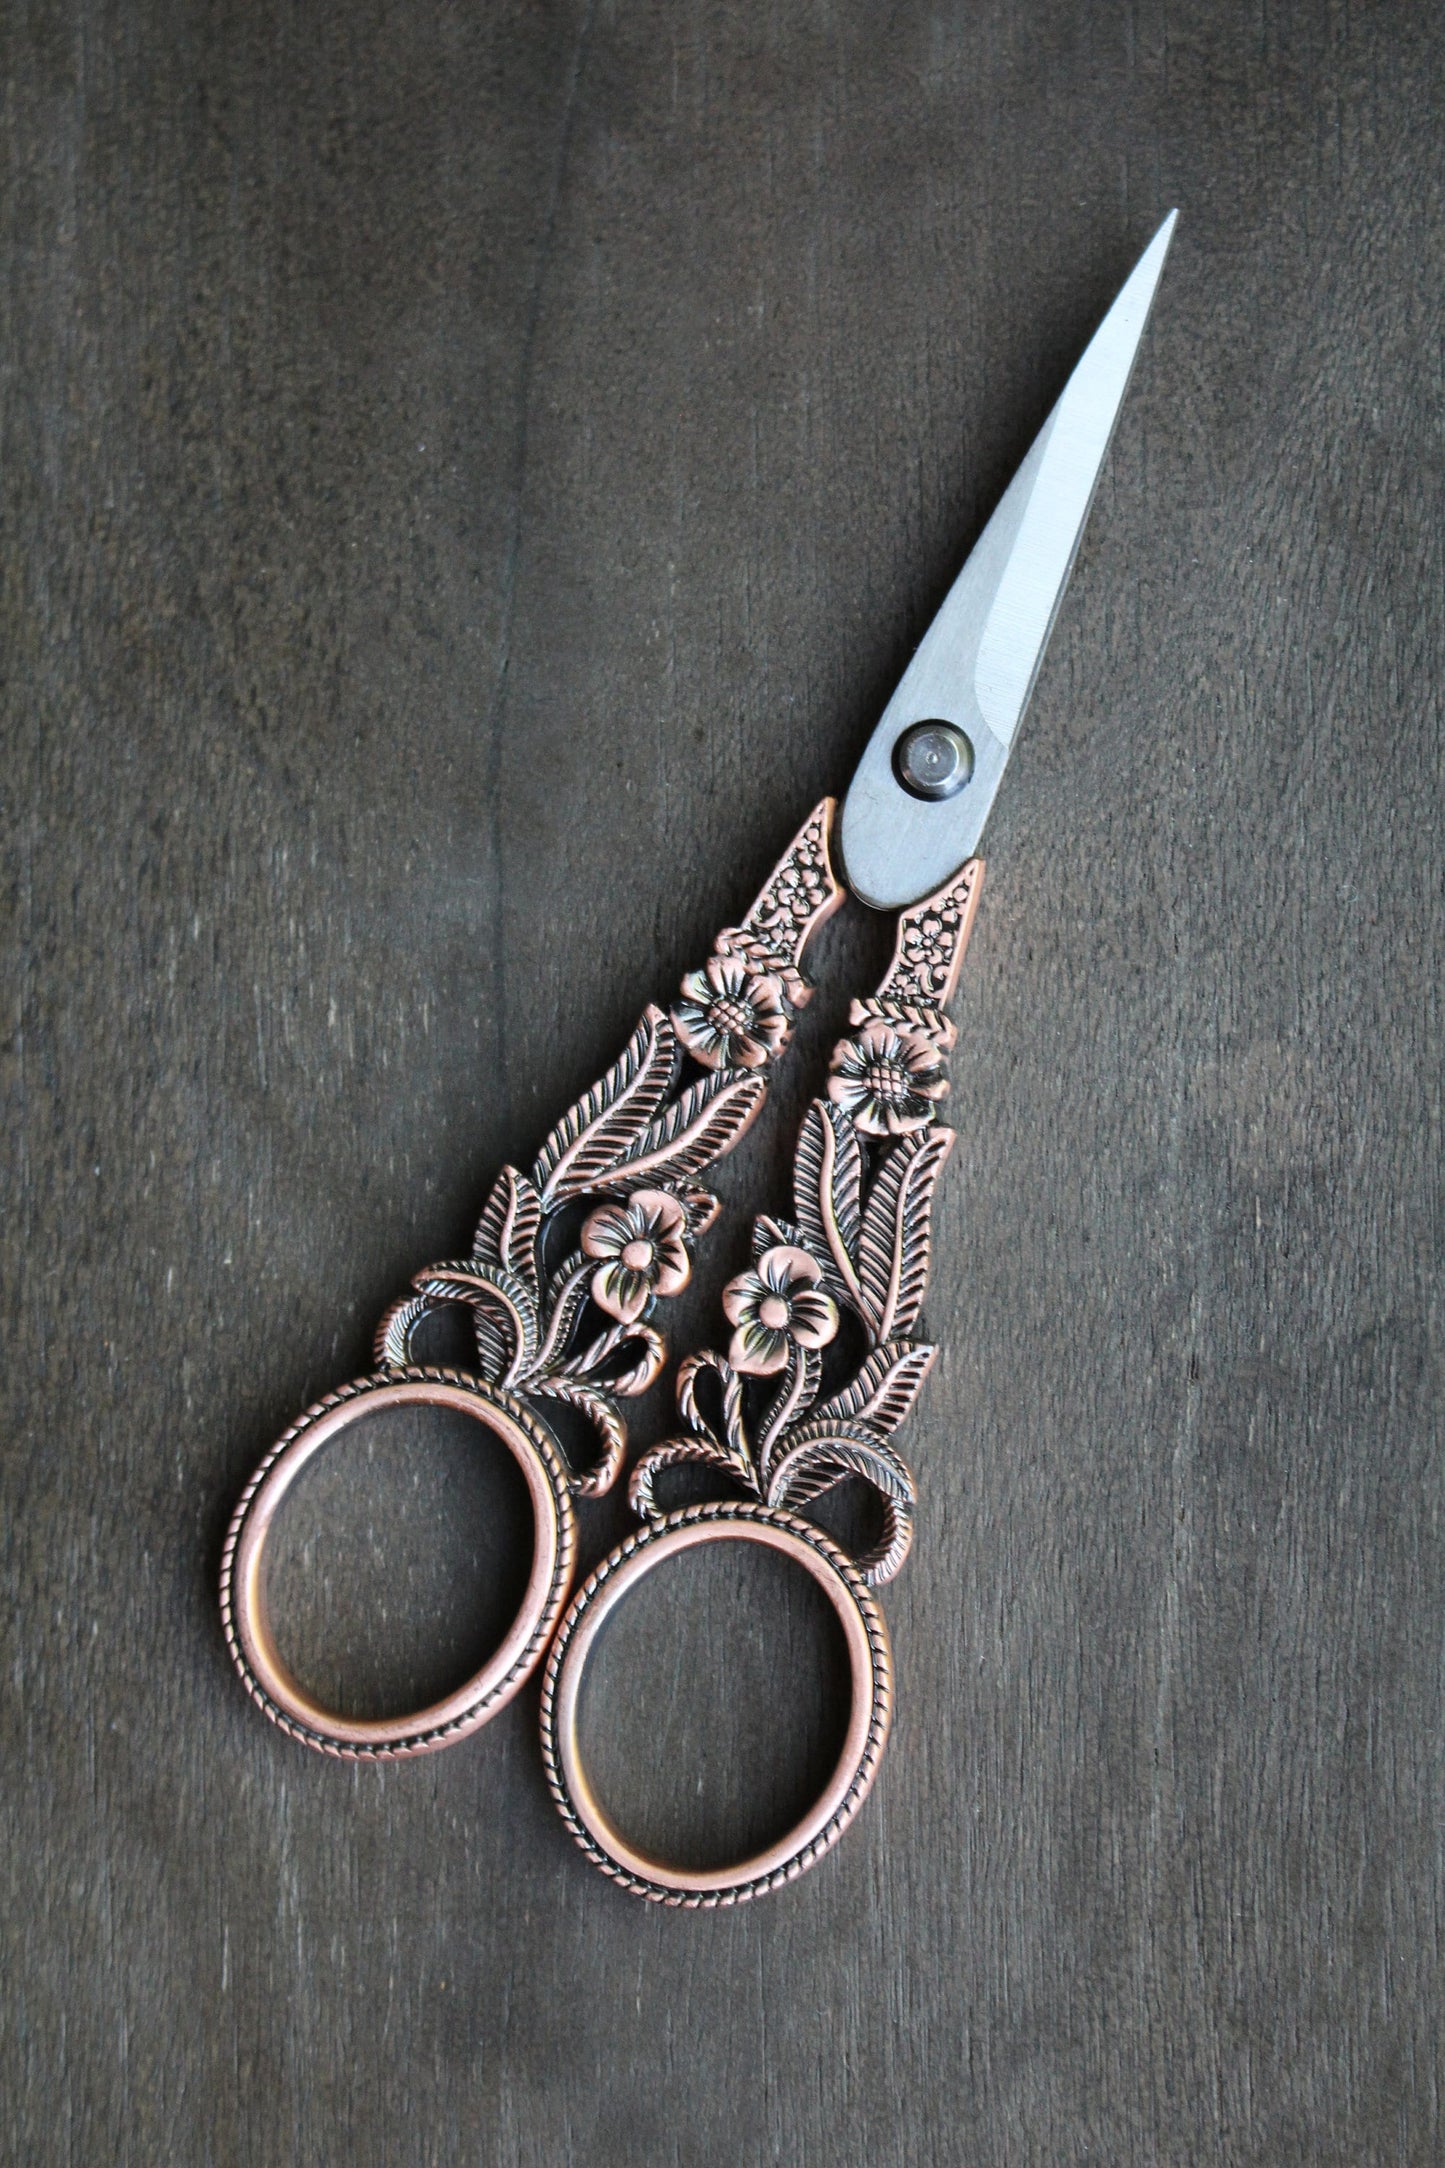 Floral Trellis Embroidery Scissors in antique copper